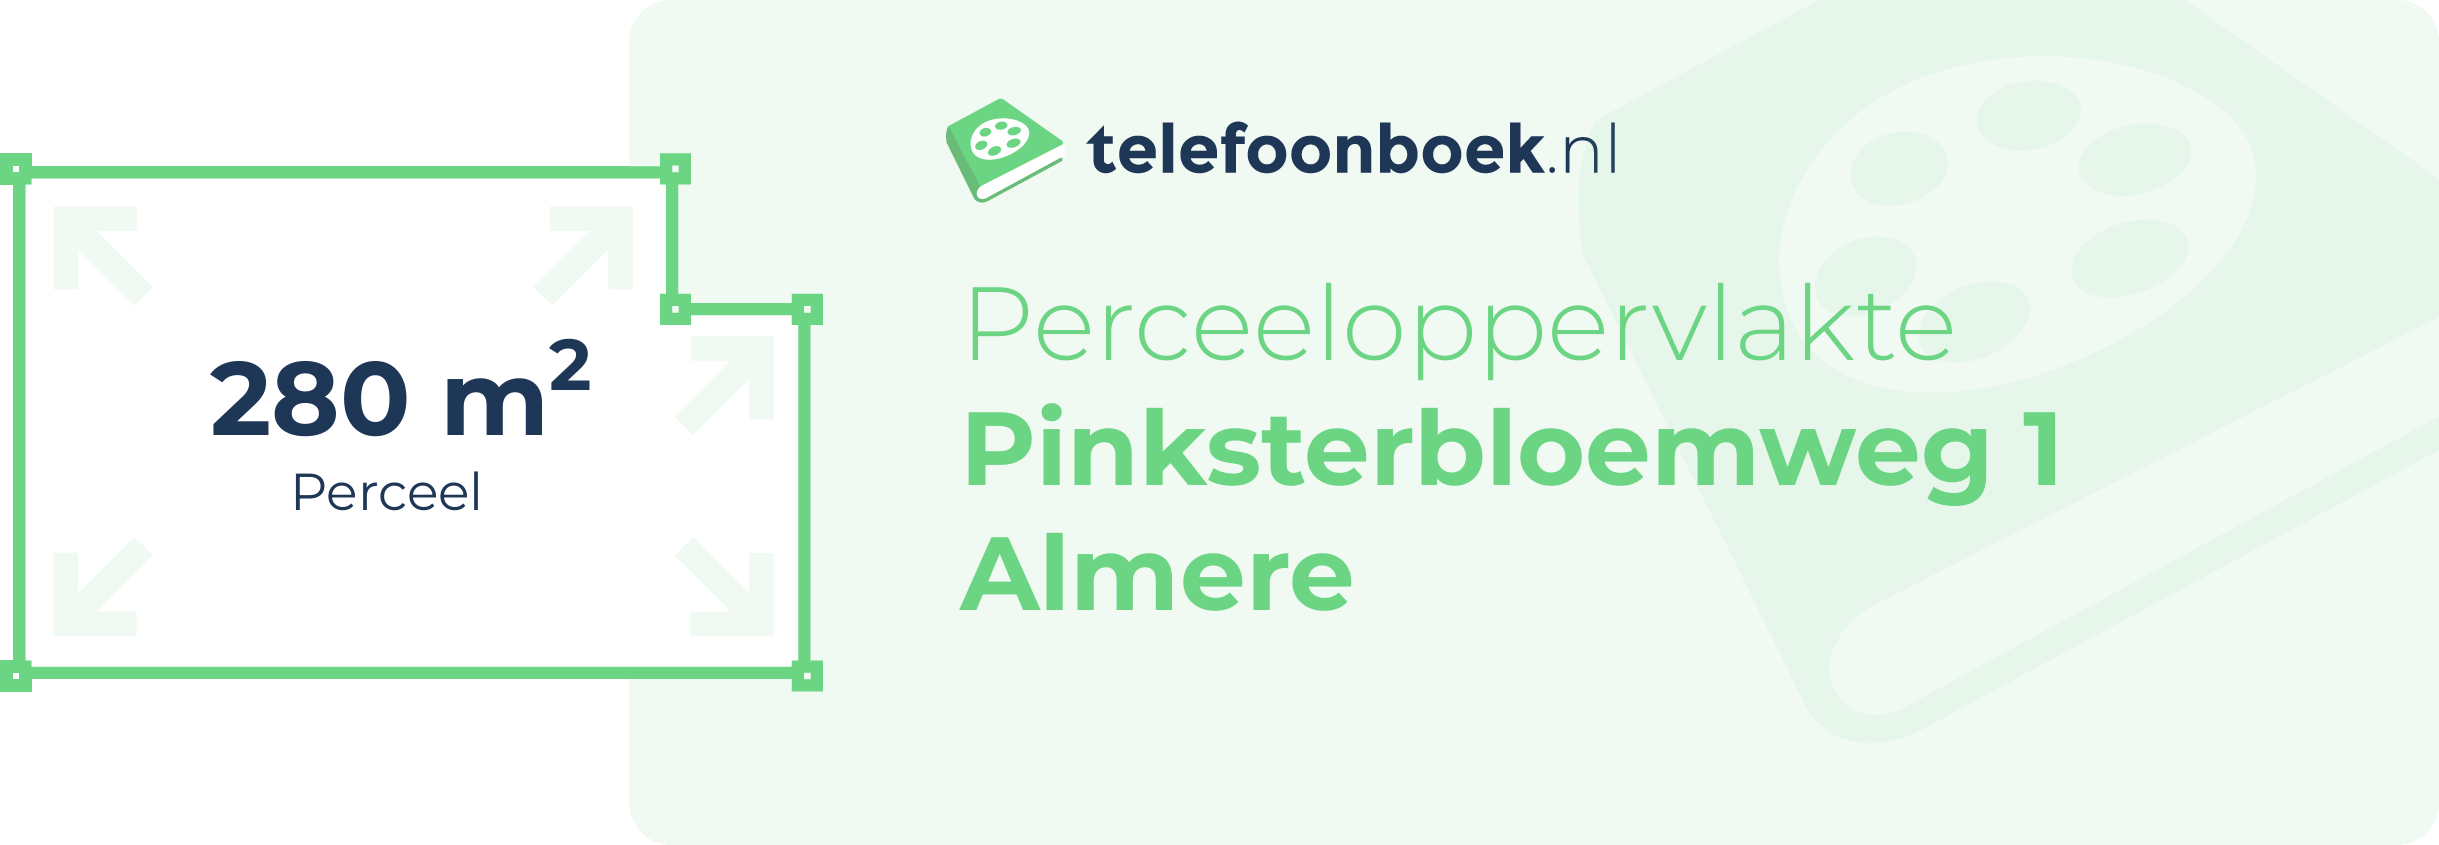 Perceeloppervlakte Pinksterbloemweg 1 Almere